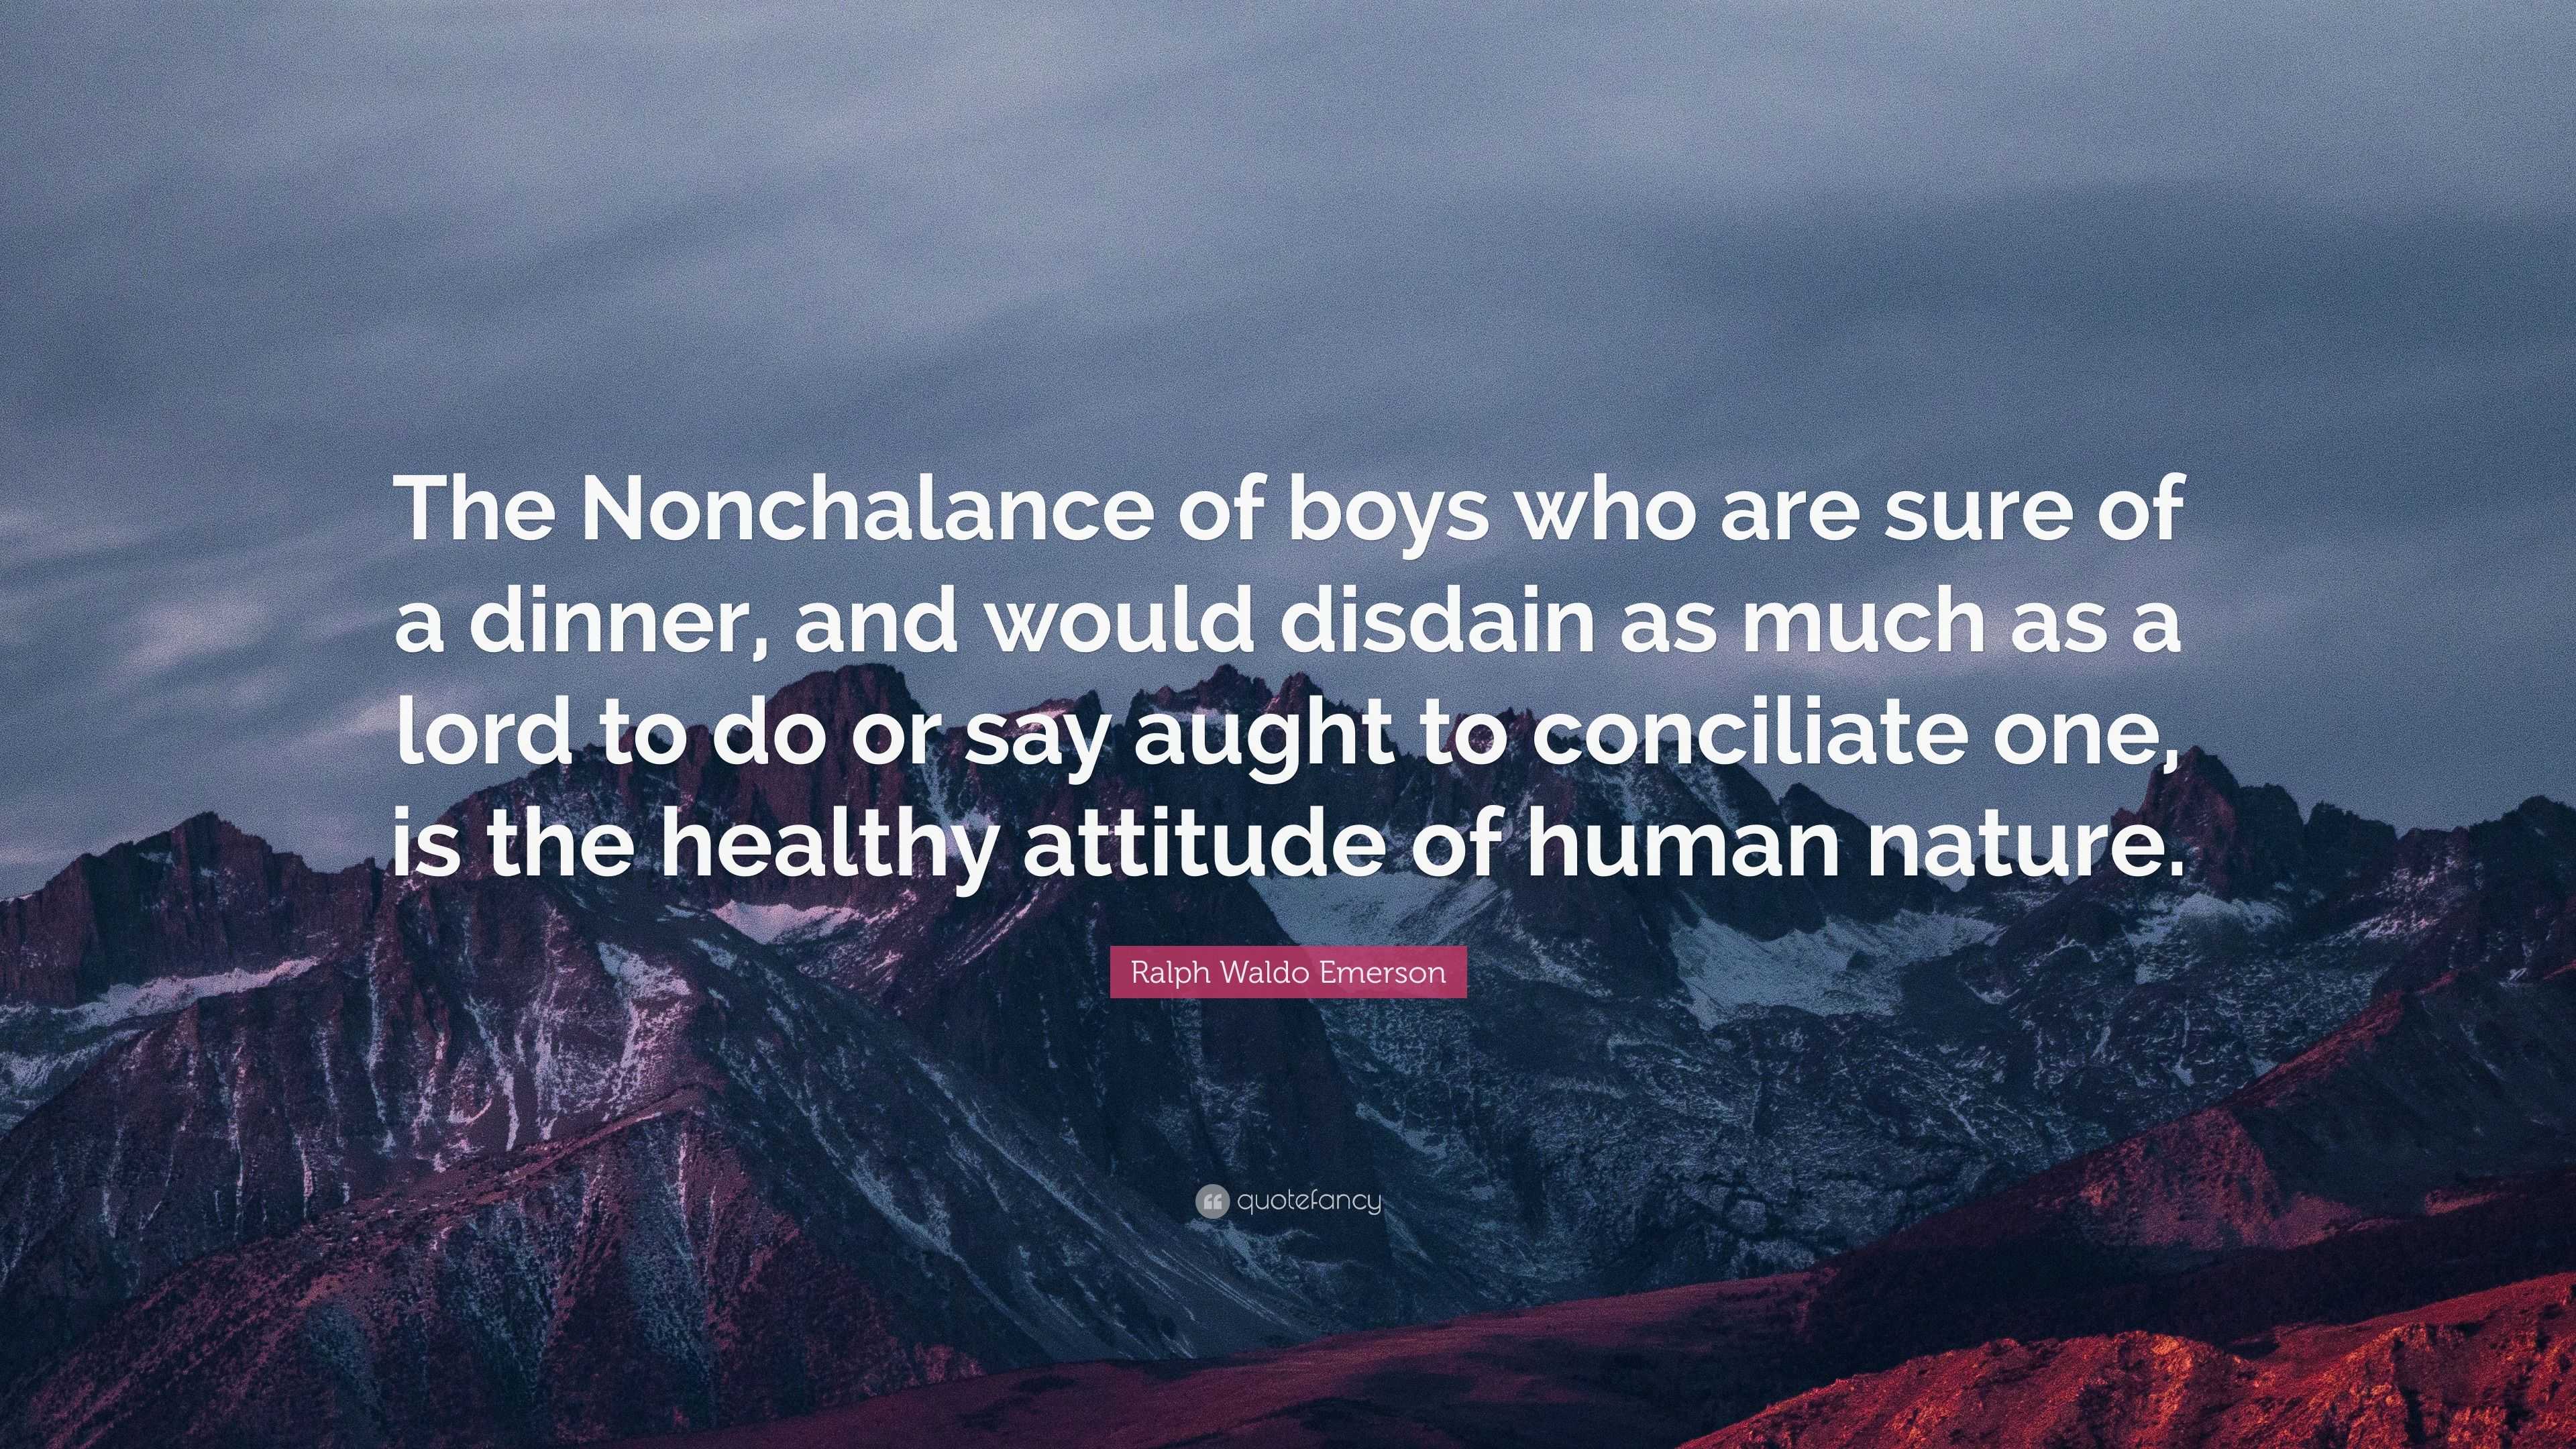 Ralph Waldo Emerson Quote: “The Nonchalance of boys who are sure of a ...